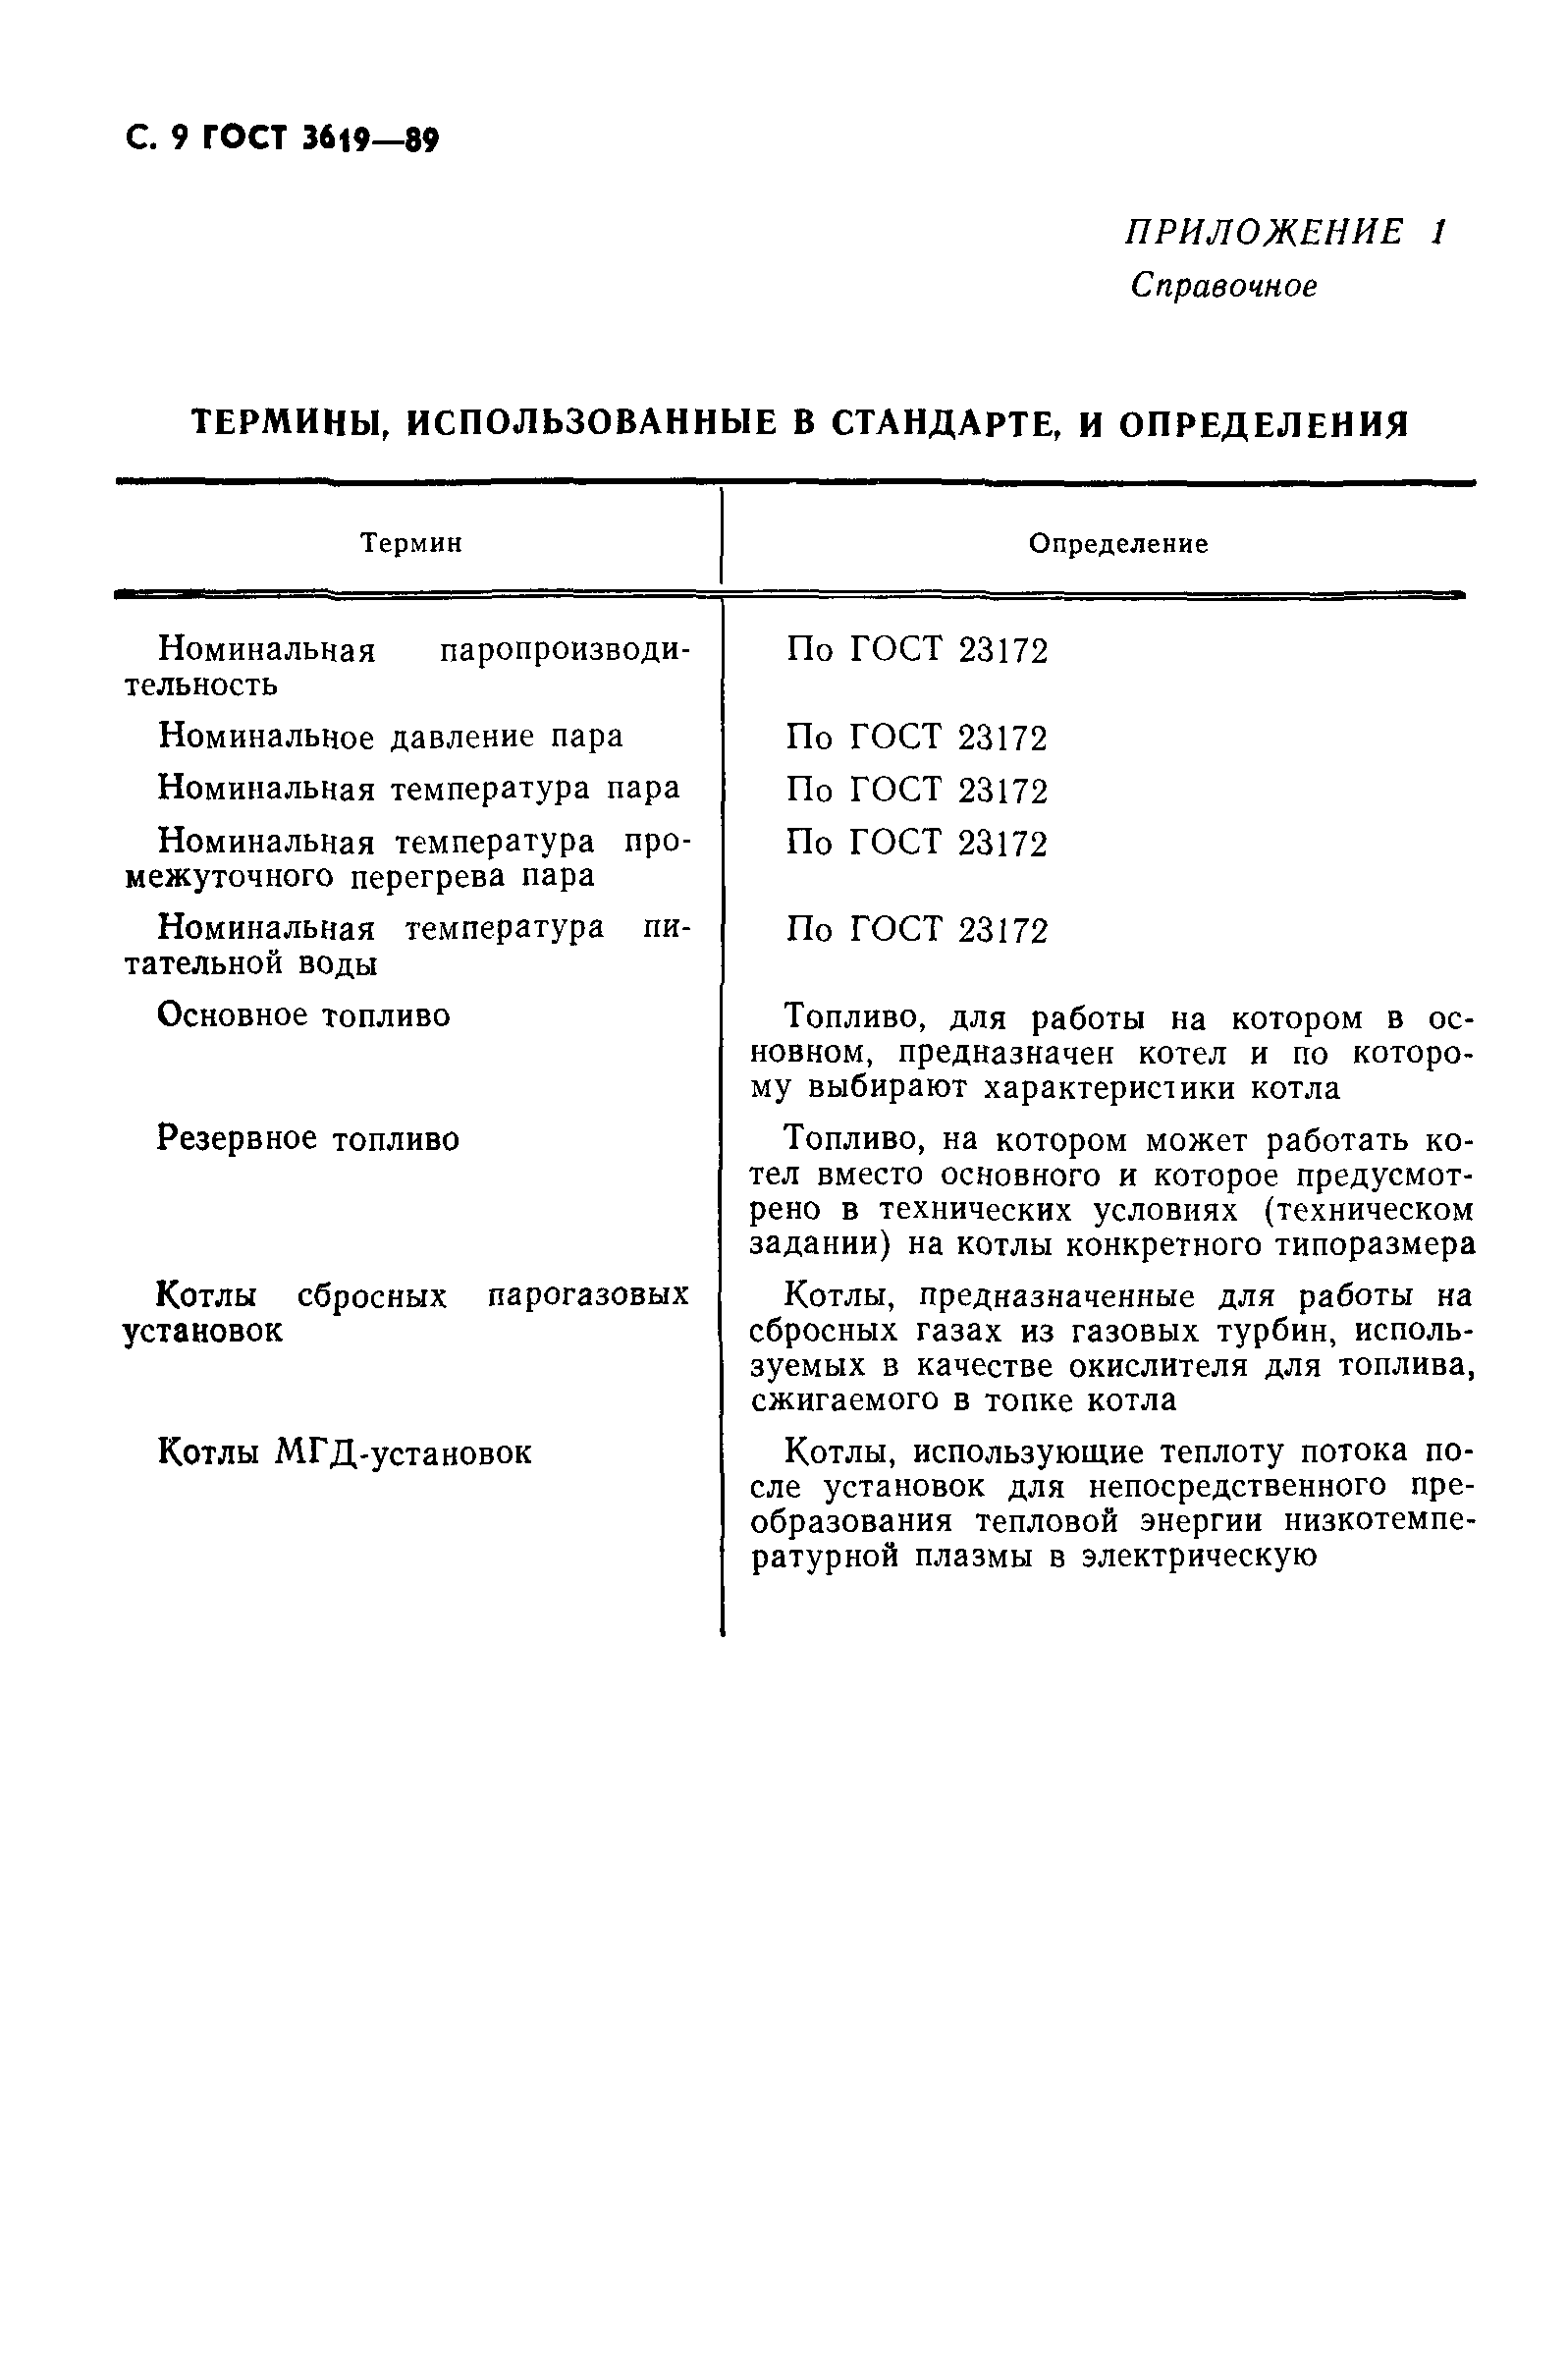 ГОСТ 3619-89